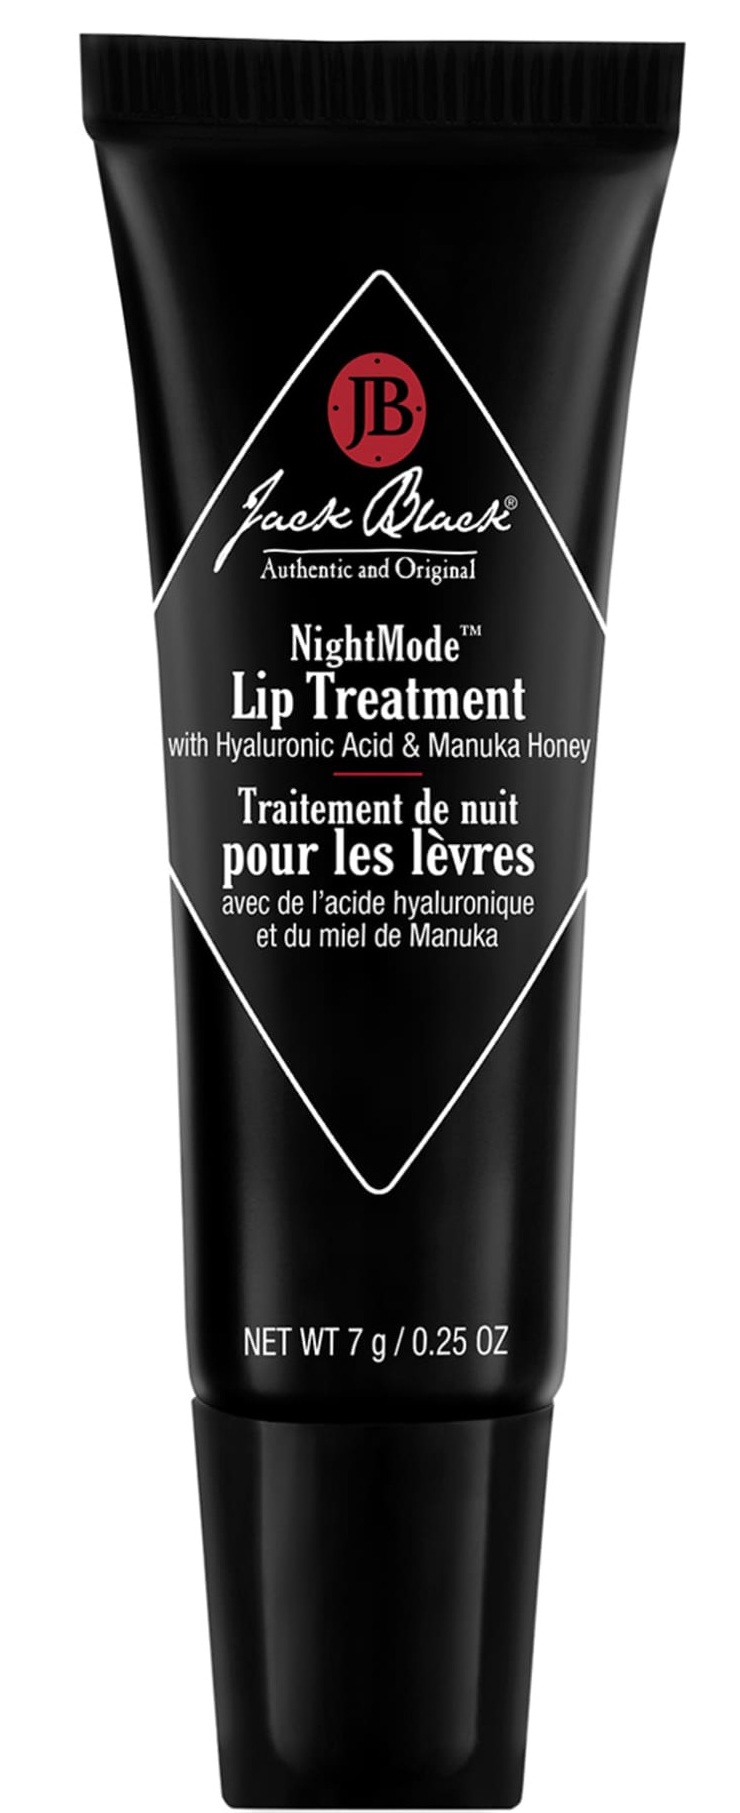 Jack Black NightMode Lip Treatment